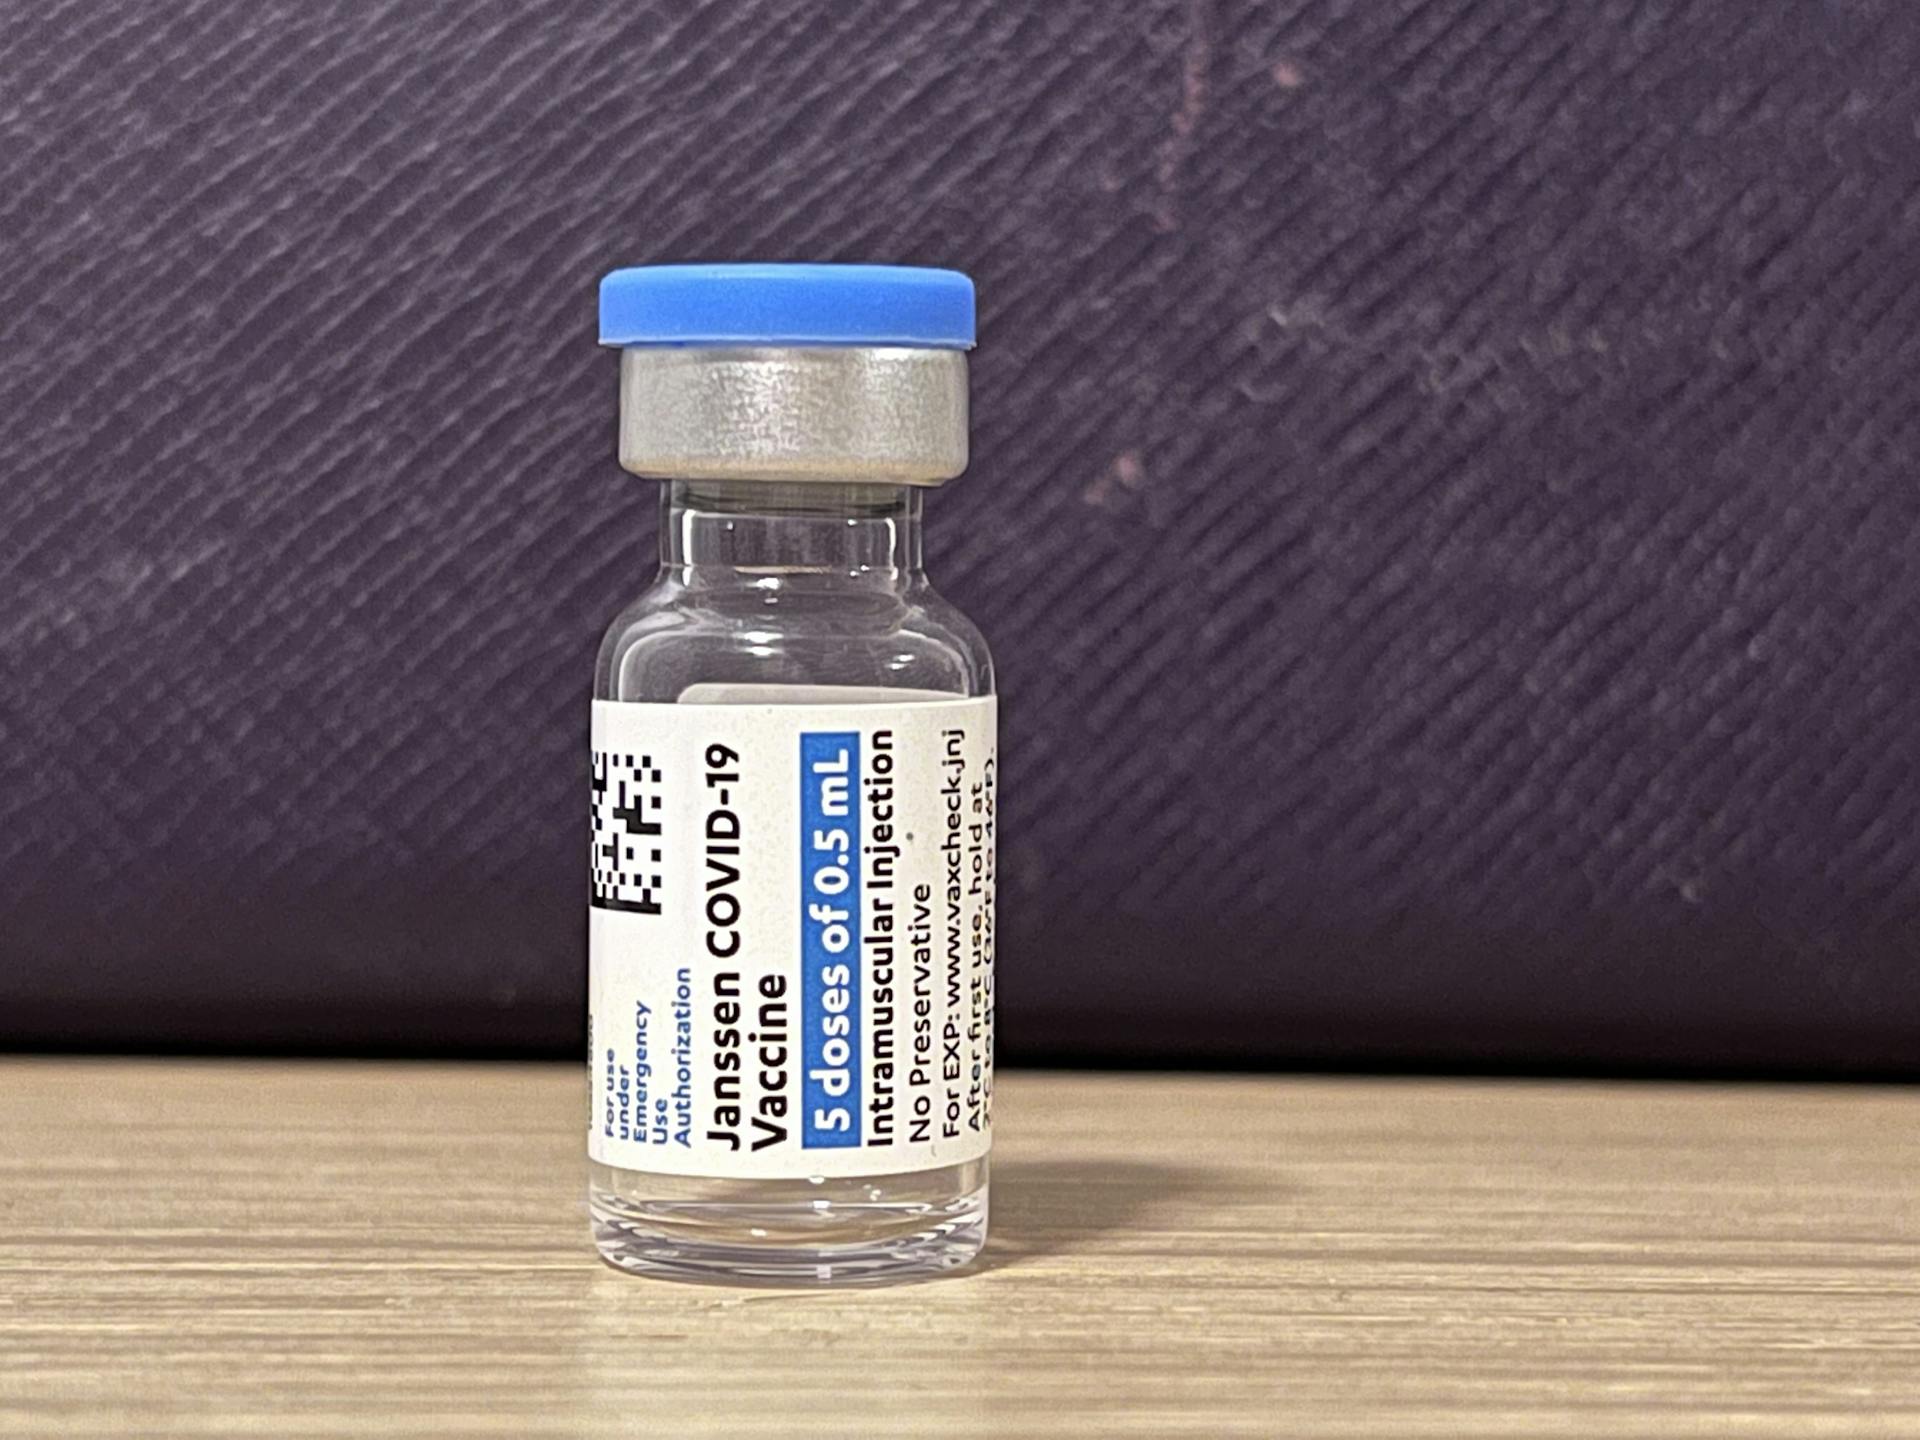 Photograph of Janssen (Johnson & Johnson) Vaccine Vial